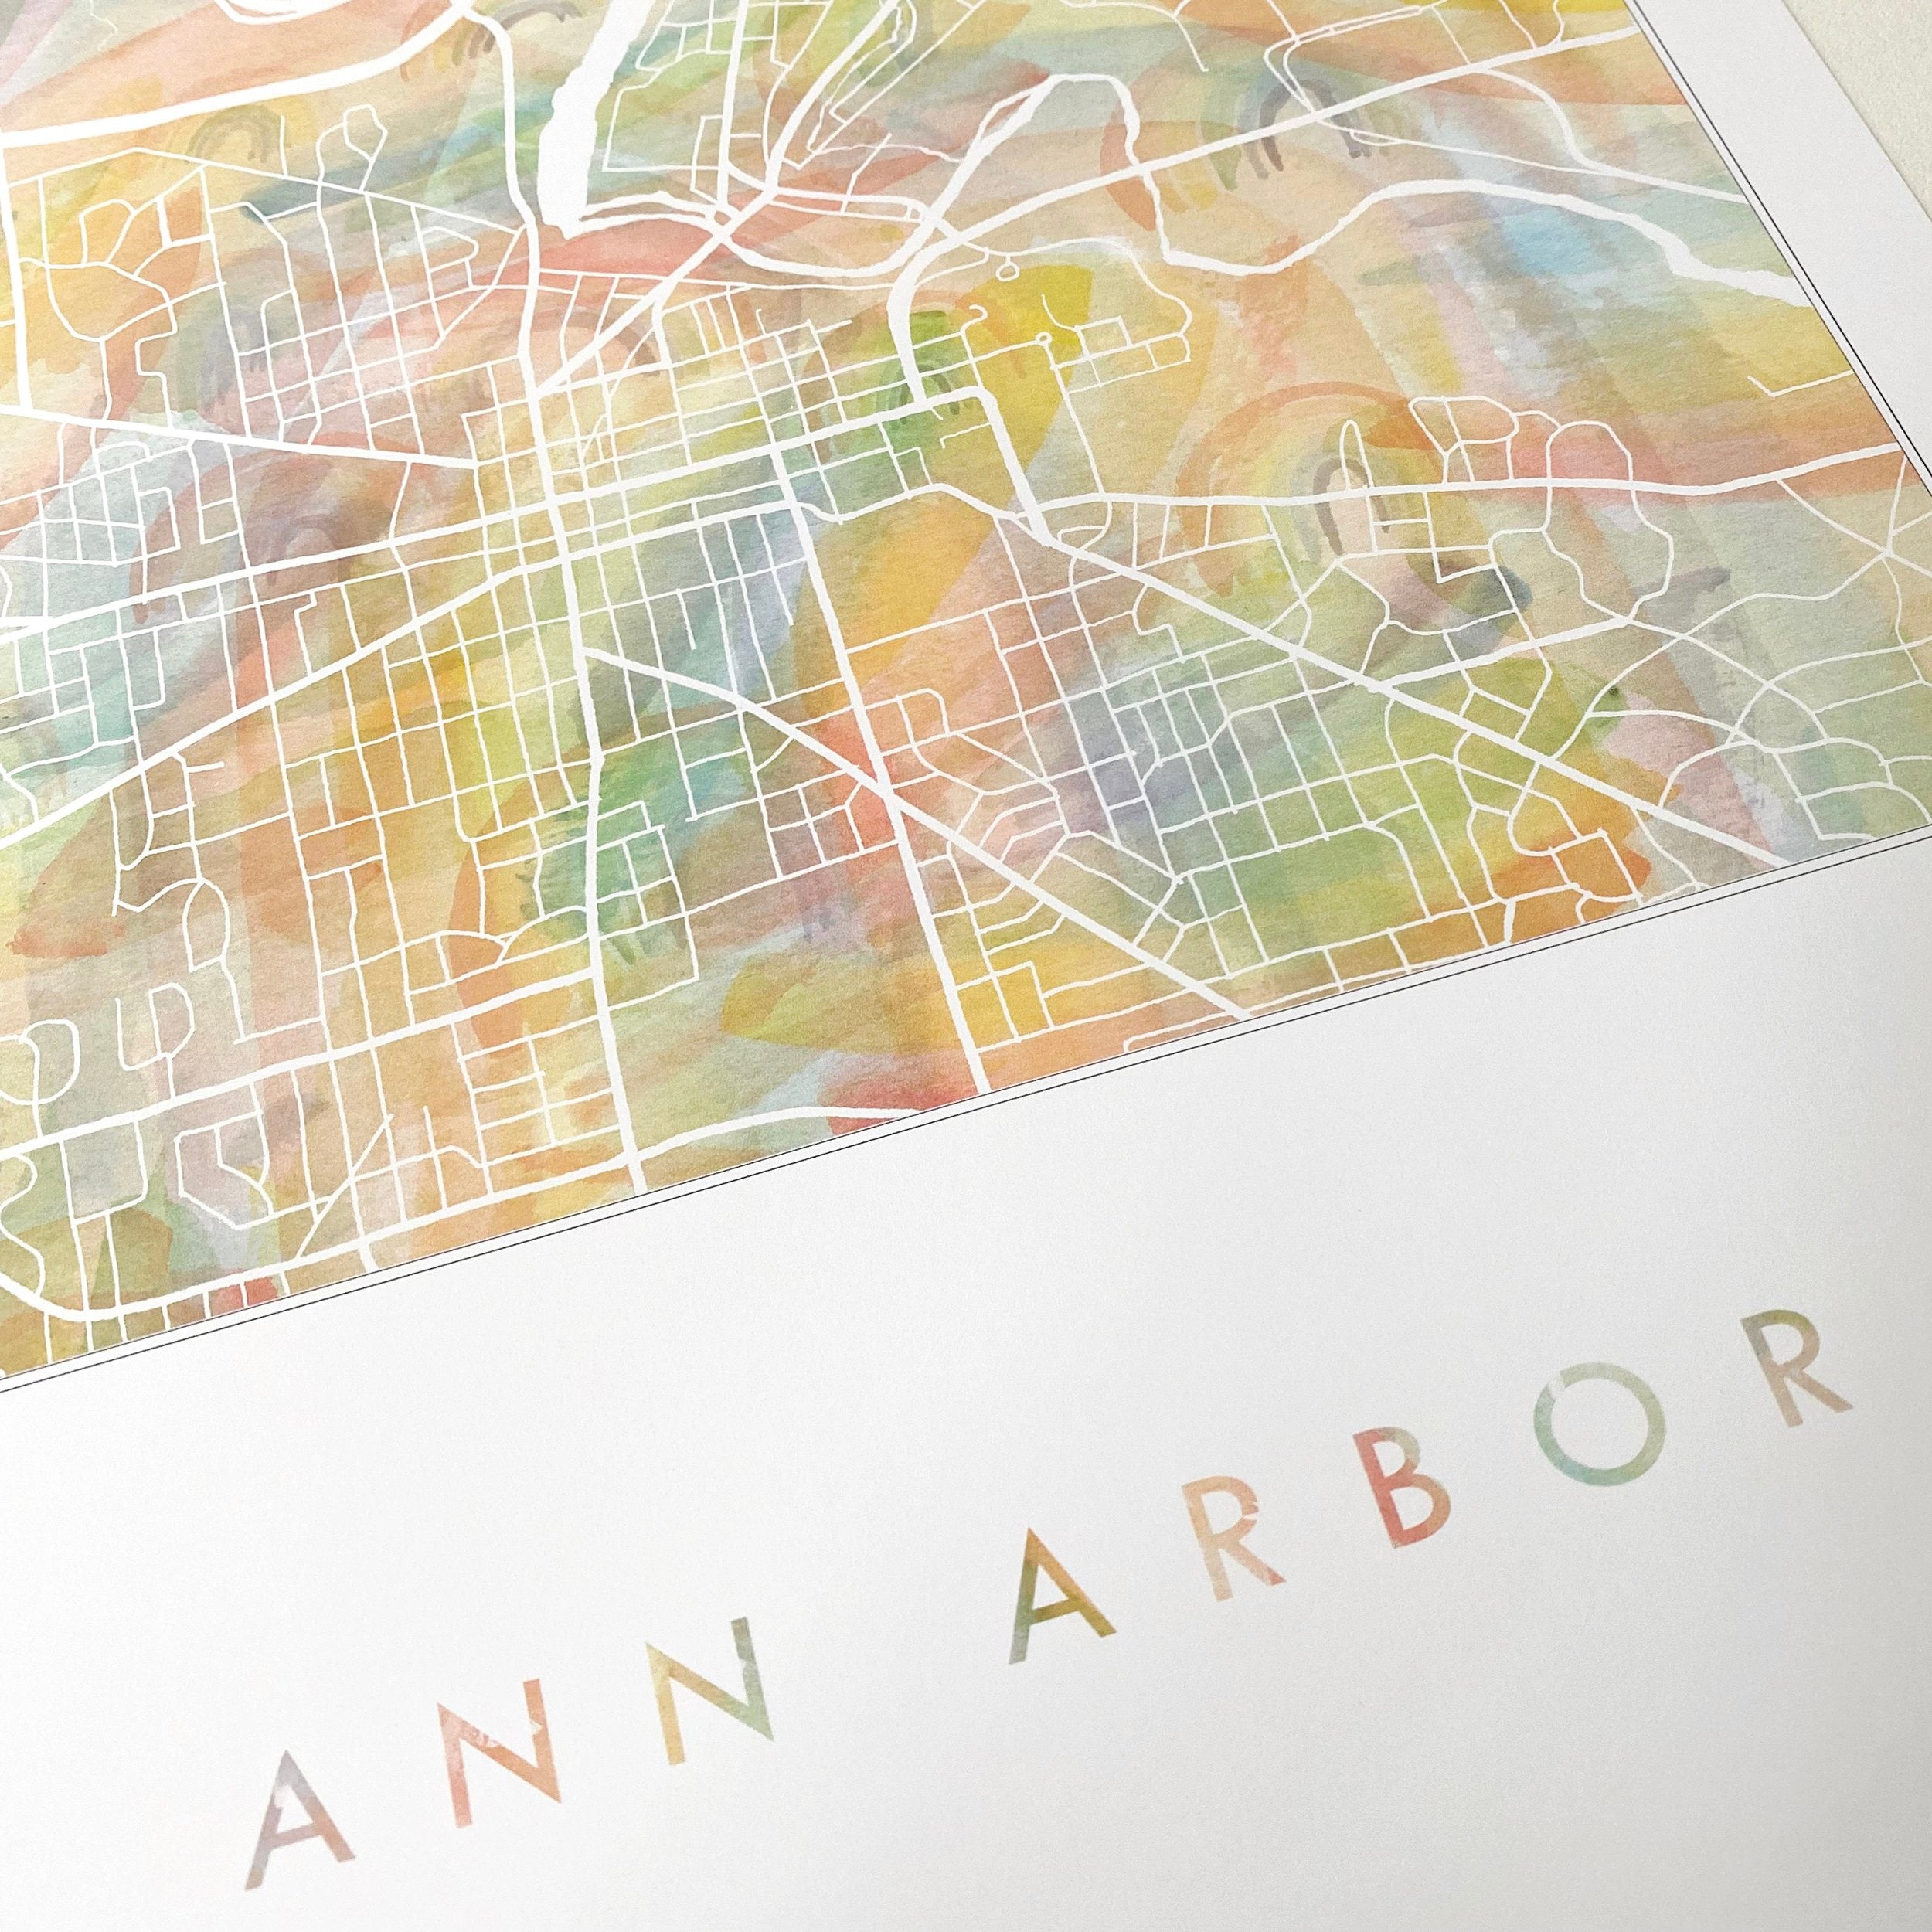 ANN ARBOR Pride Rainbow Watercolor Map: PRINT